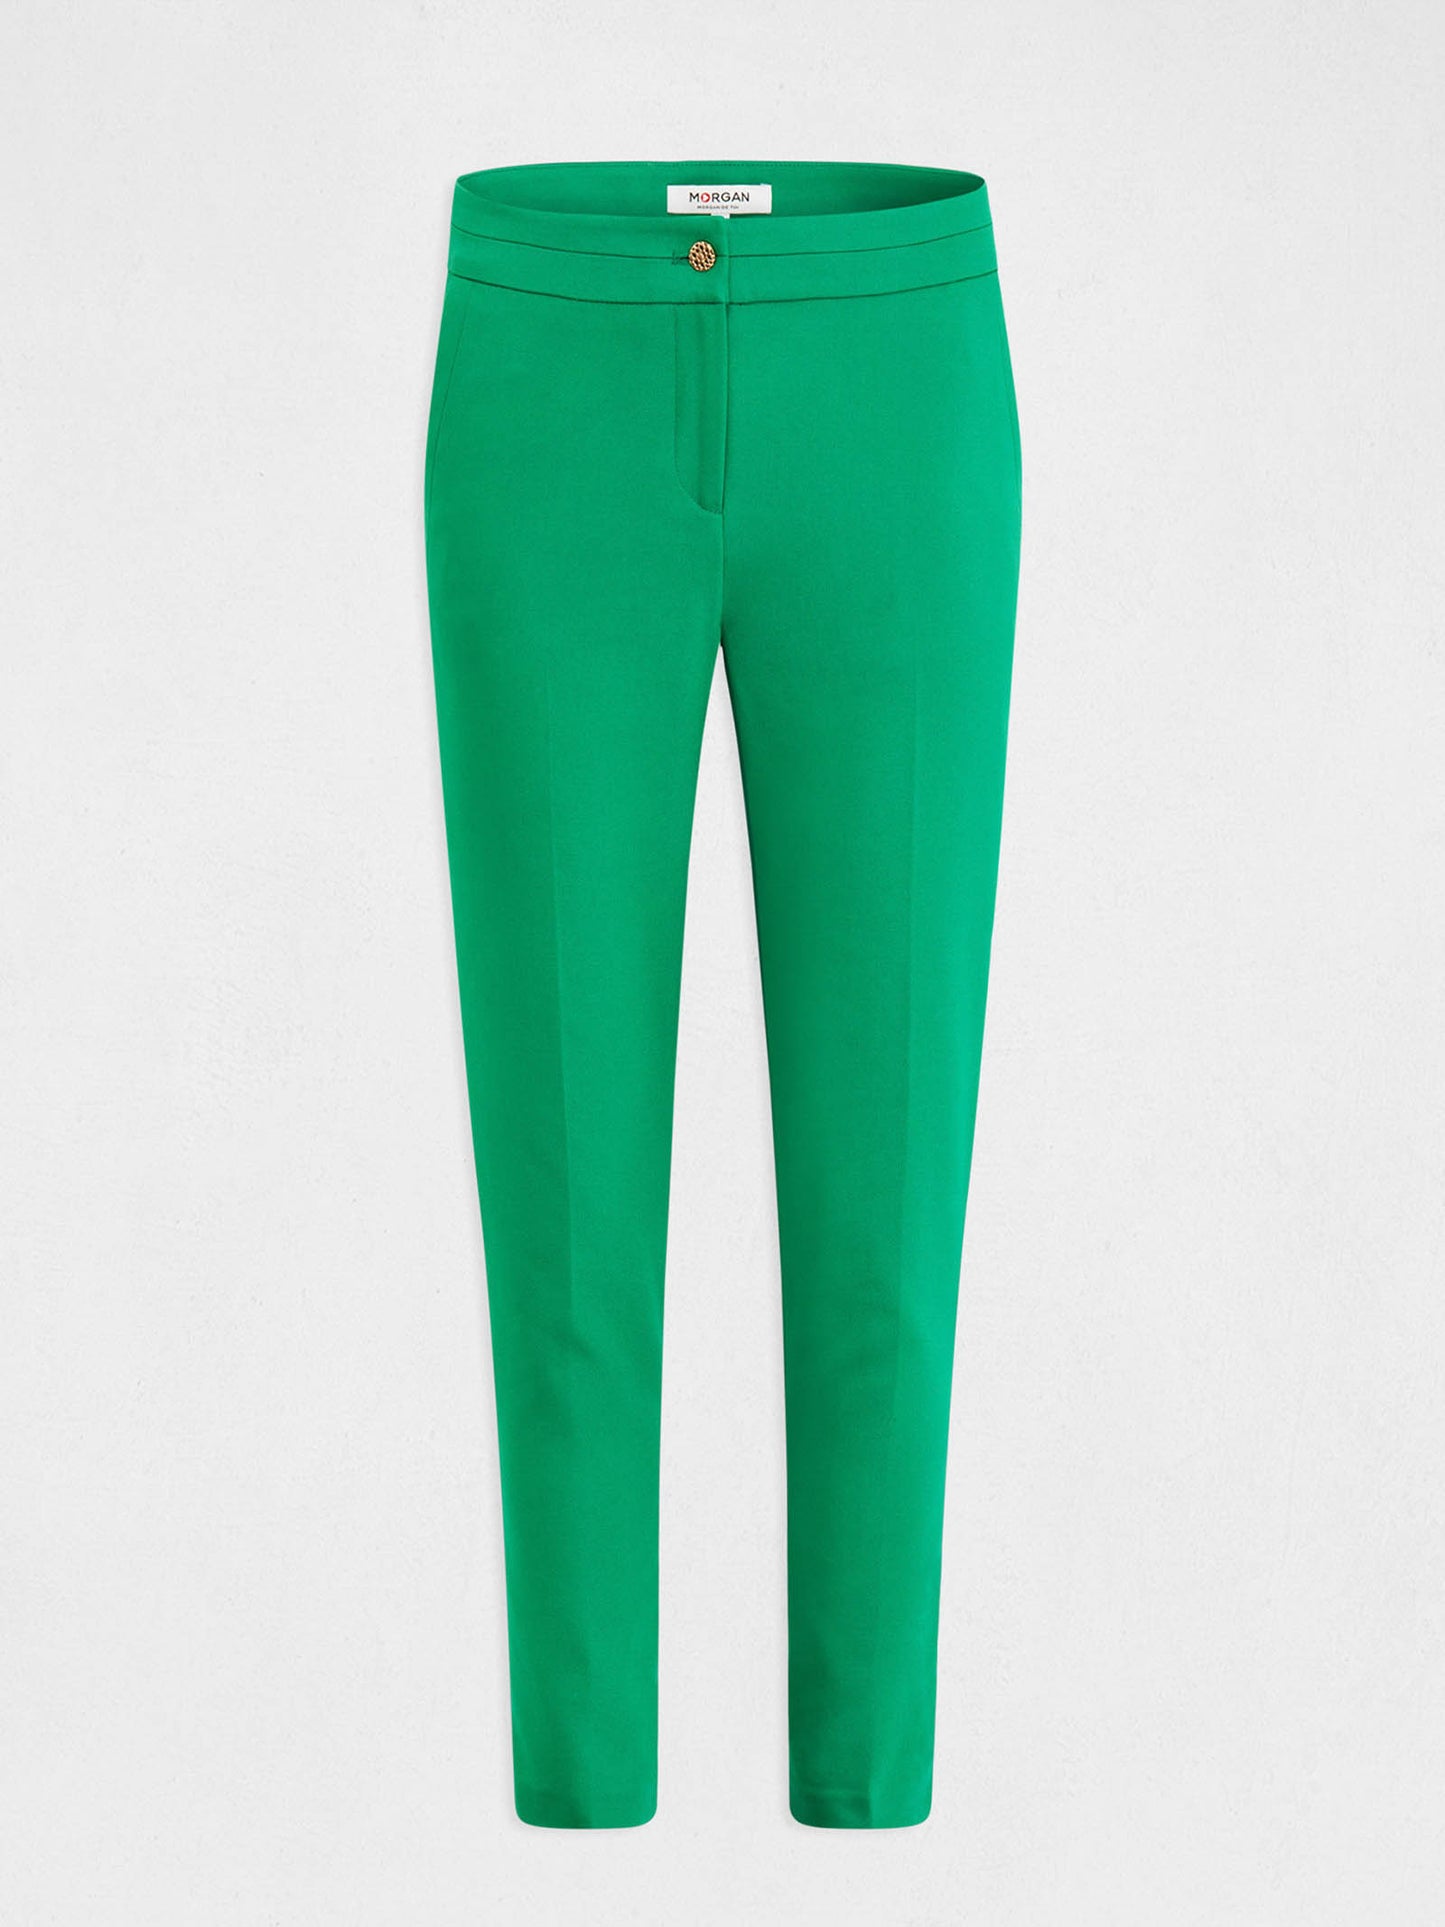 Morgan de toi pantalone verde - Premium PANTALONI from MORGAN DE TOI - Just €59! Shop now at Amaltea